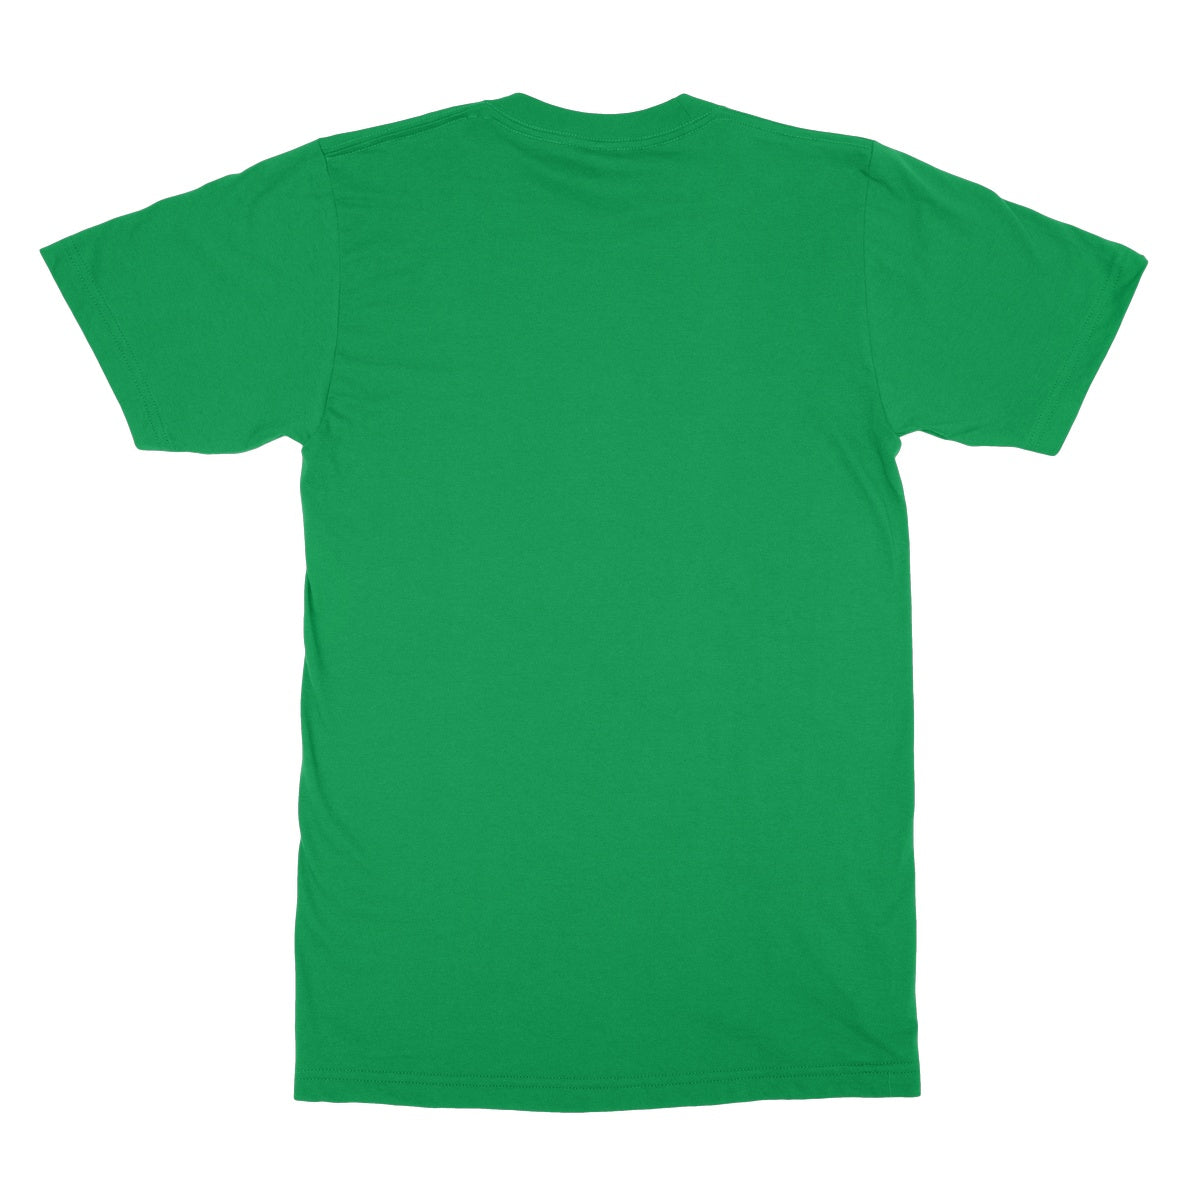 Kuen's Surface, Mesh Softstyle T-Shirt